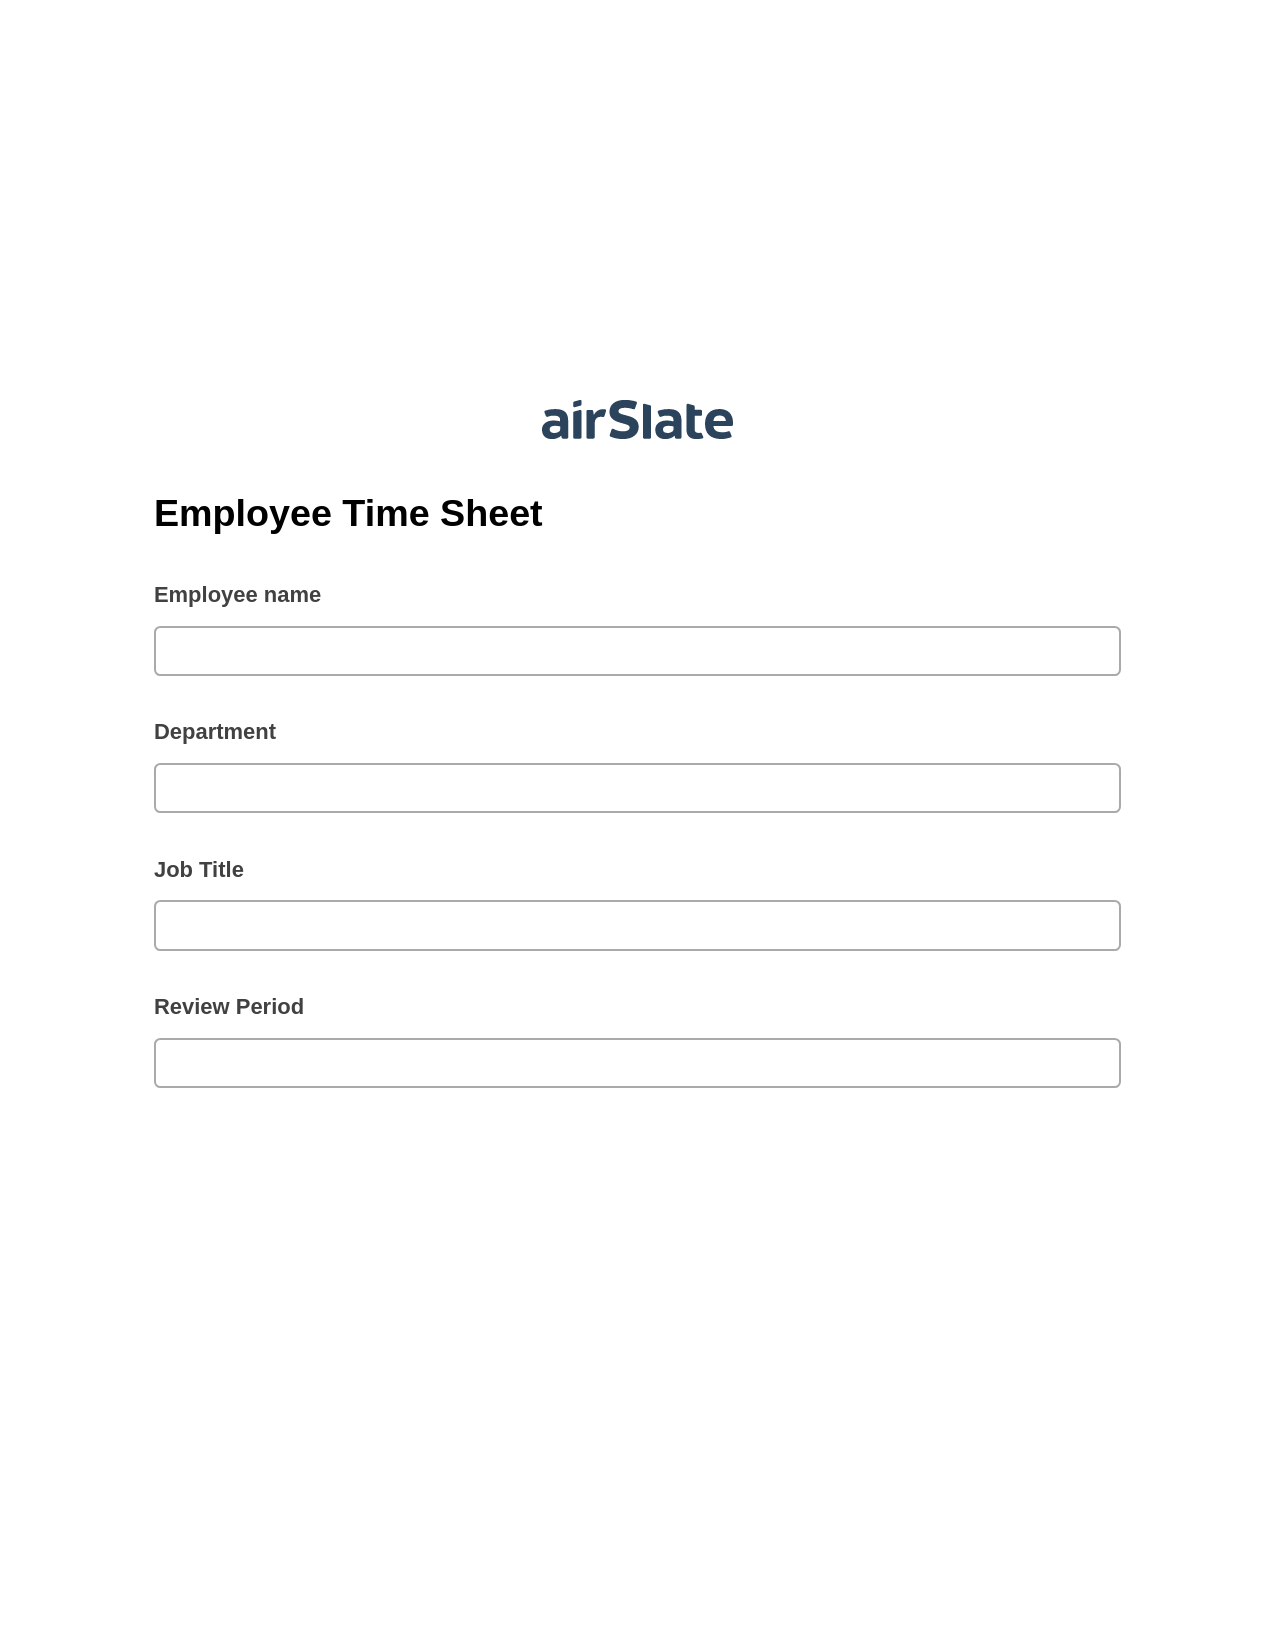 Multirole Employee Time Sheet Pre-fill from Excel Spreadsheet Bot, Lock the Slate Bot, Export to Google Sheet Bot